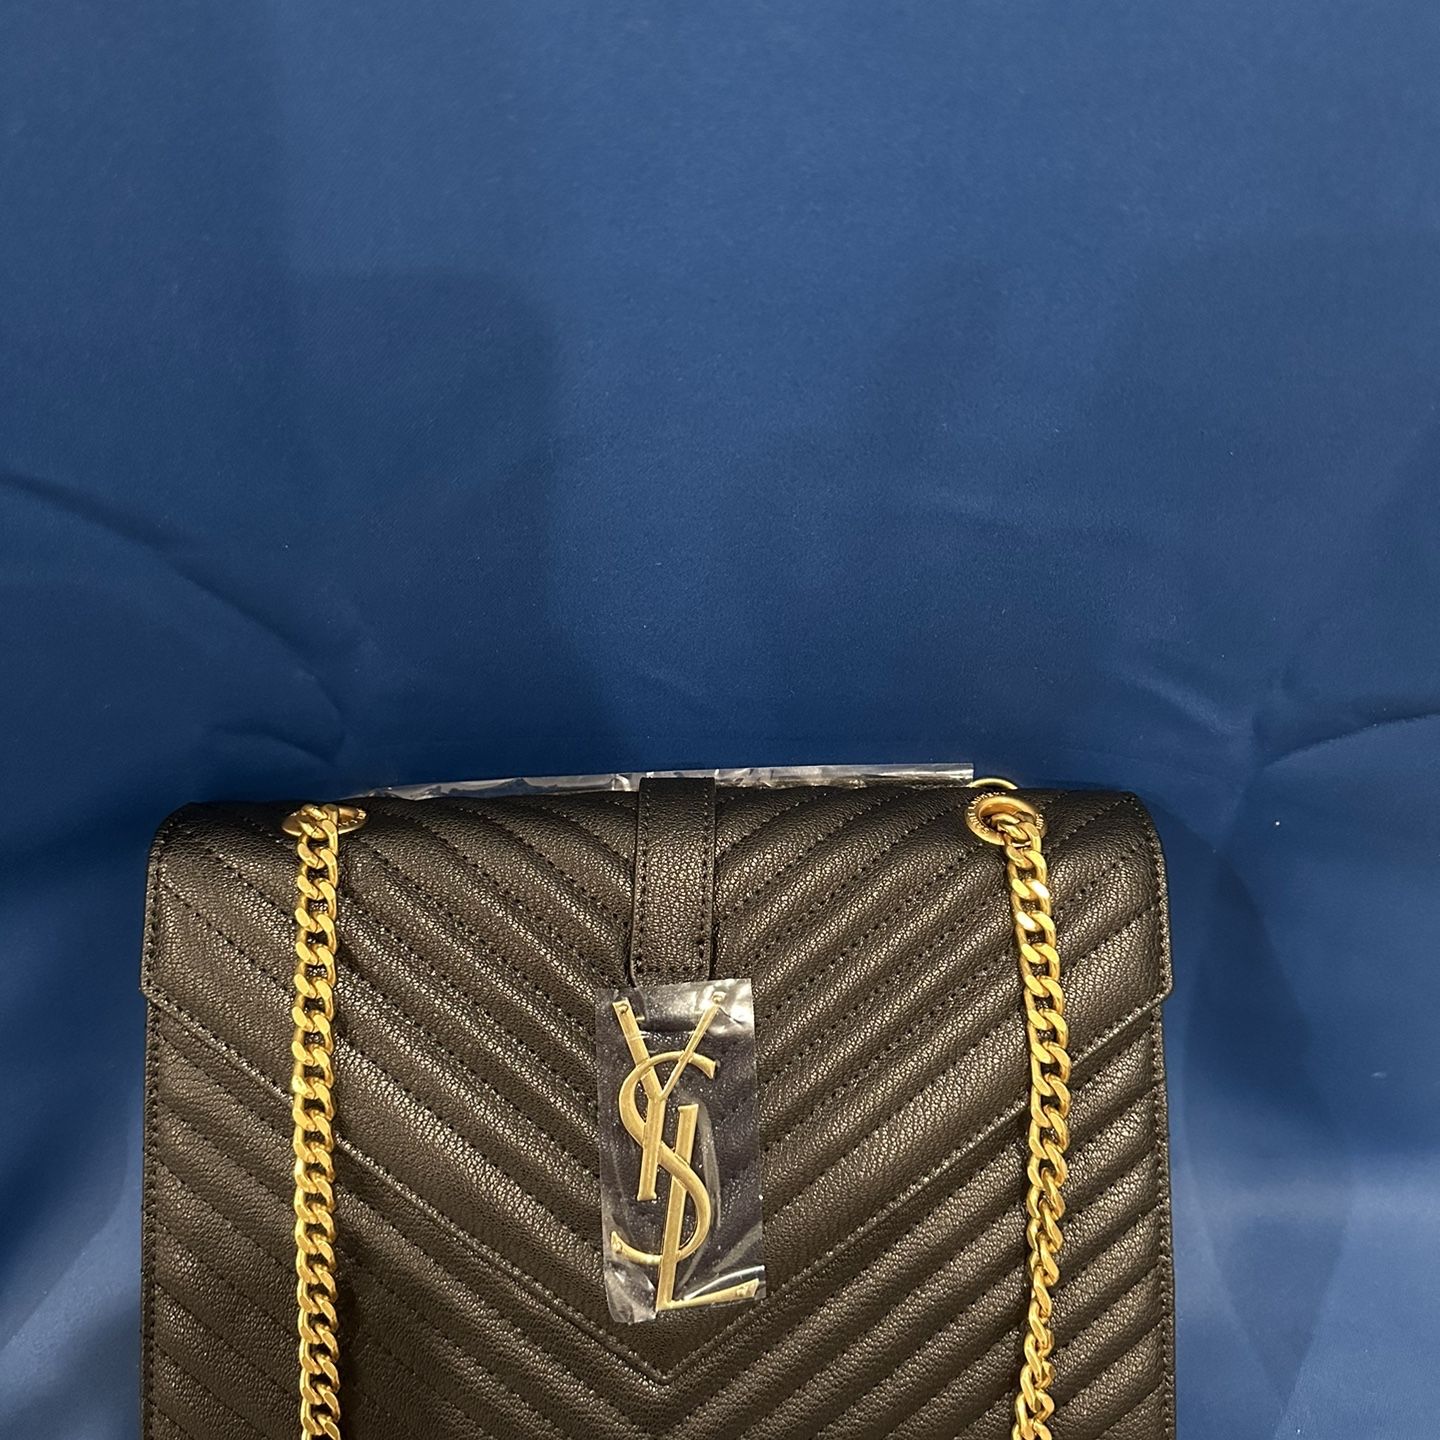 Yves Saint Laurent bag silver buckle envelope bag medium chain bag ladies  handbag shoulder bag for Sale in Philadelphia, PA - OfferUp